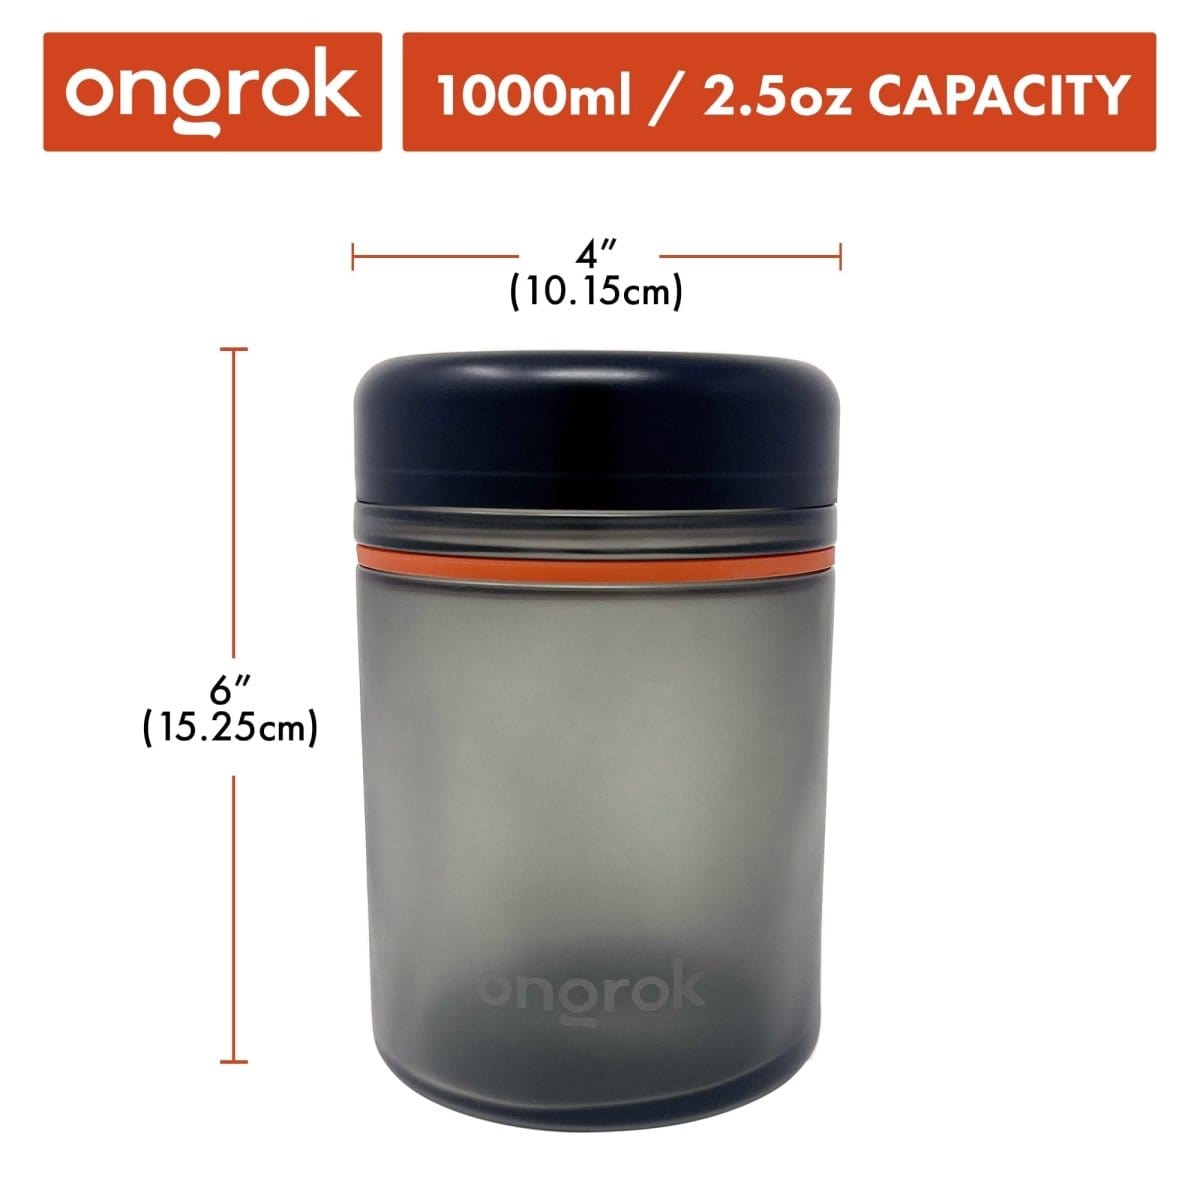 ONGROK USA Home & Garden 1000ml Child Resistant Storage Jar, 1 pack